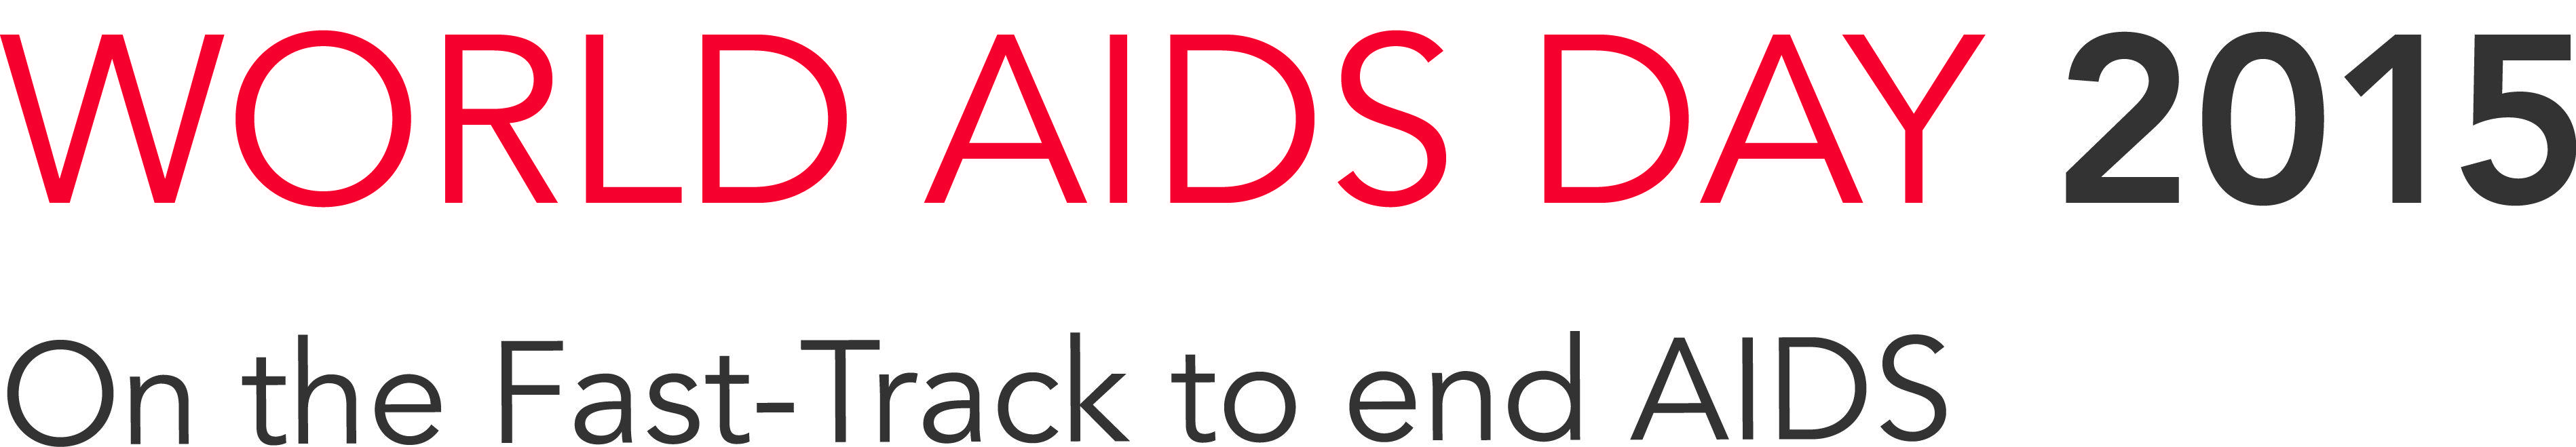 UNAIDS Logo - World AIDS Day 2015